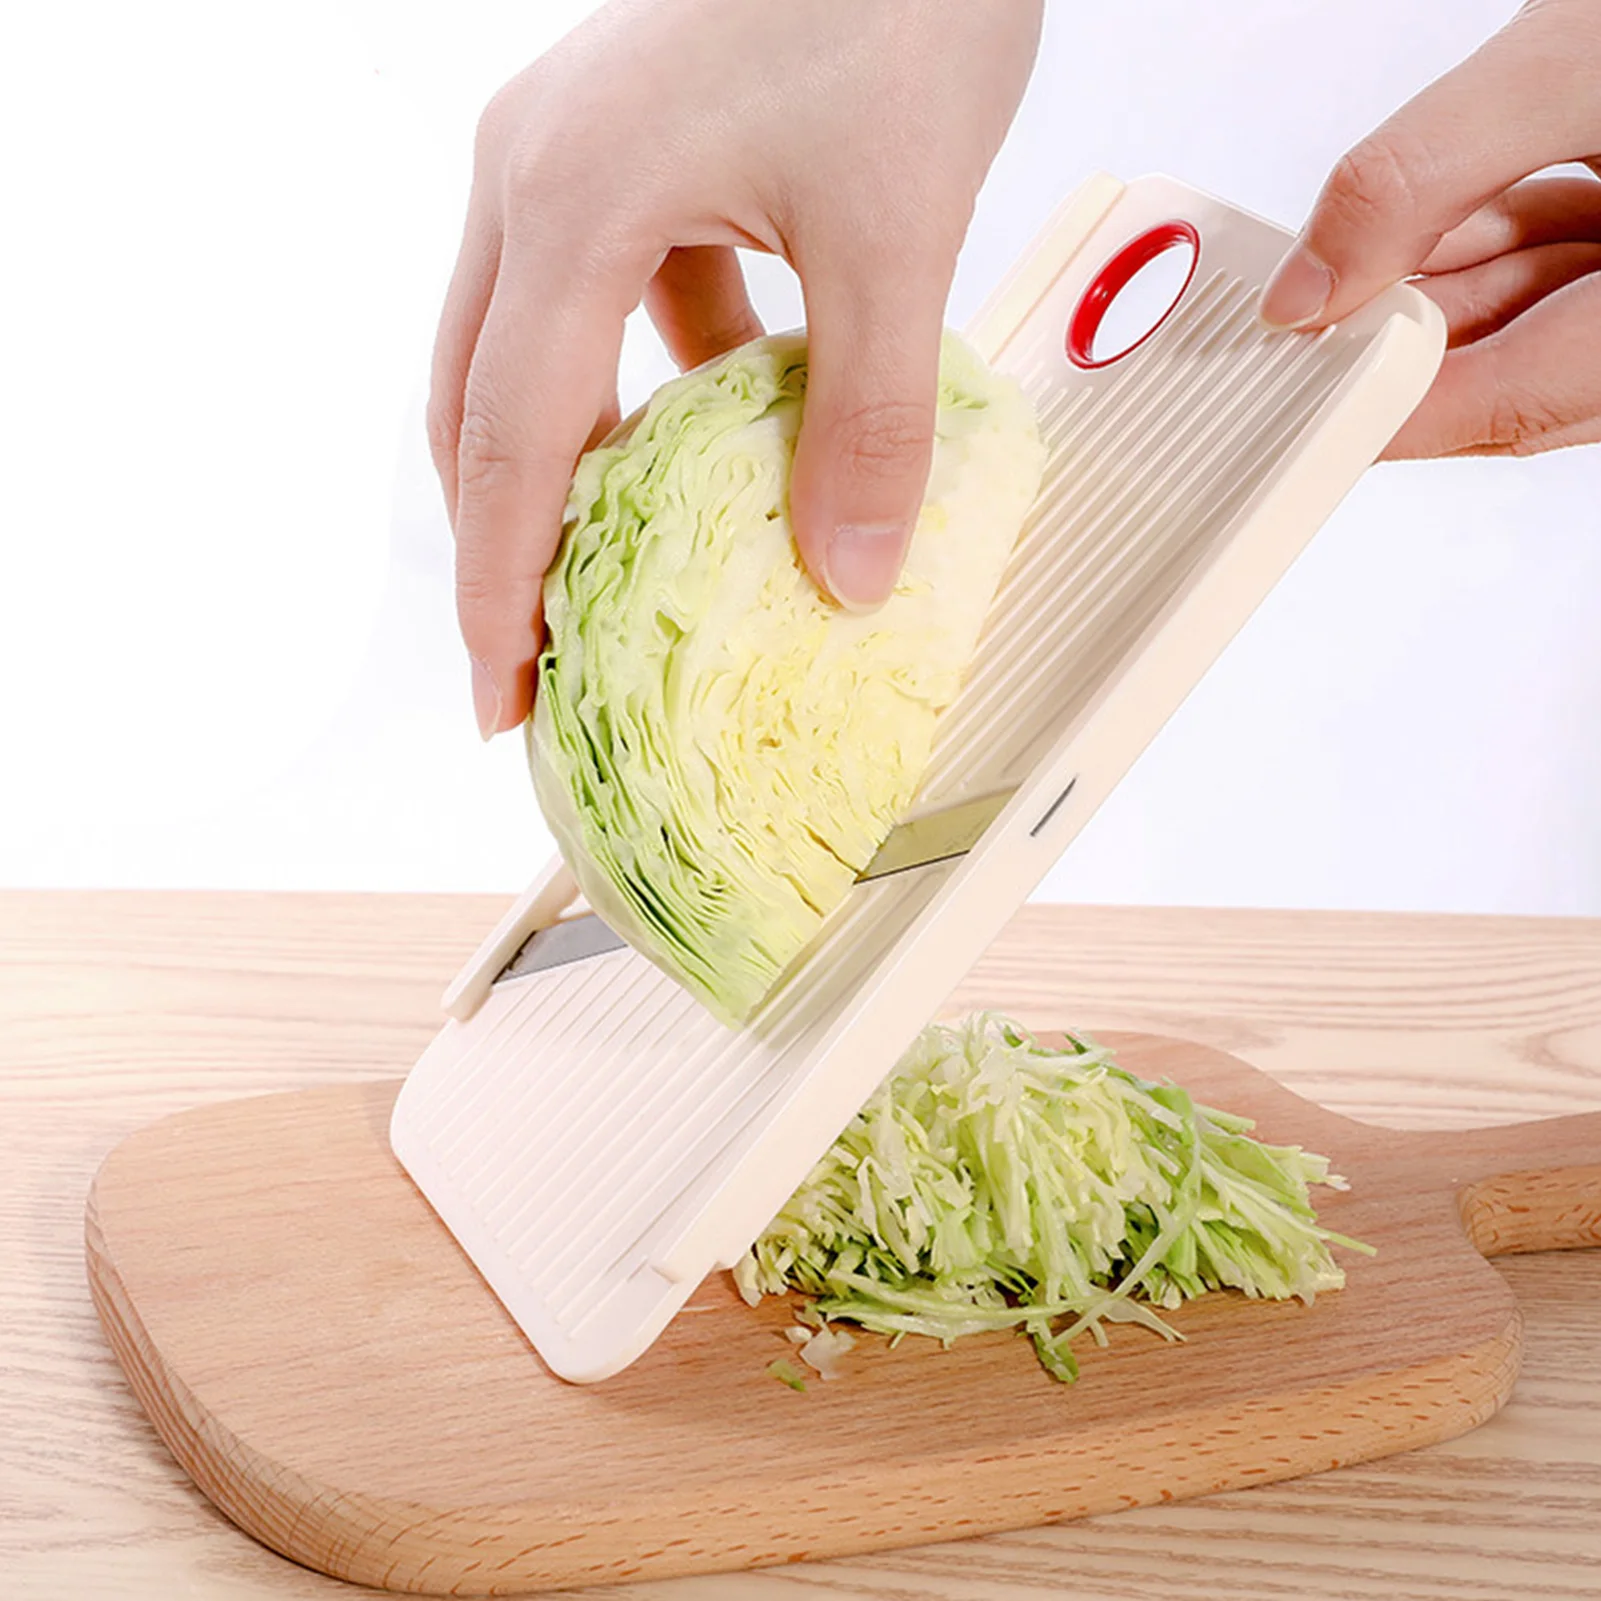 https://ae01.alicdn.com/kf/S1e7db4d54743454cb069d1d09cde564c9/Manual-Food-Chopper-Kitchen-Vegetable-Slicer-French-Fry-Slicer-Vegetable-Chopper-And-Cutter-For-Home-Potatoes.jpg